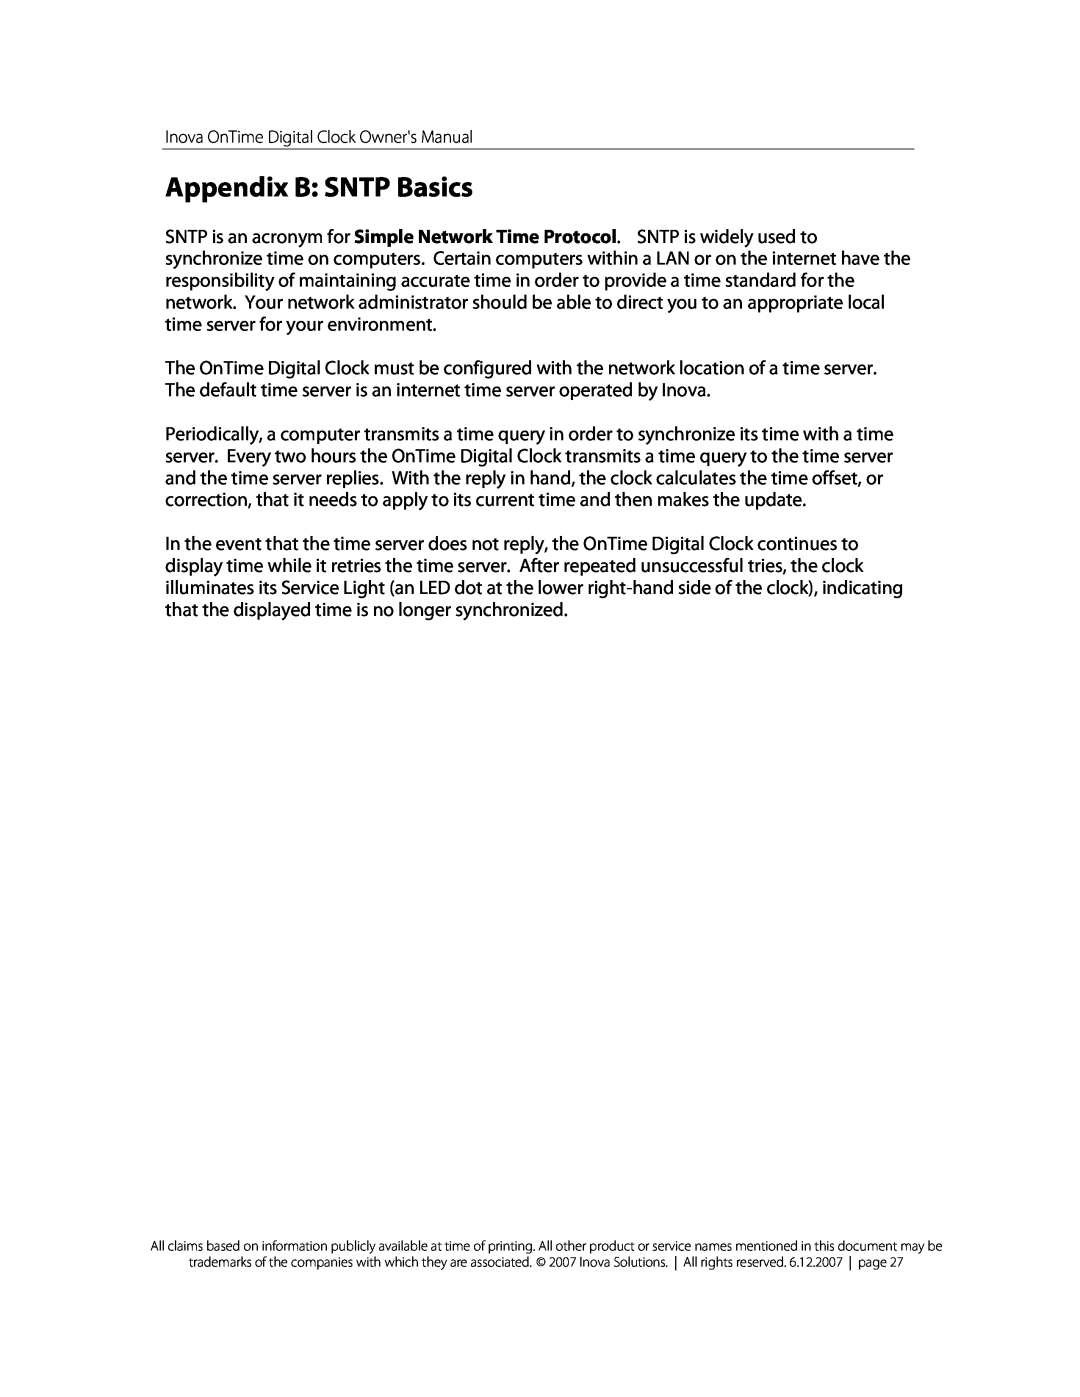 Inova OnTimeTM owner manual Appendix B SNTP Basics 